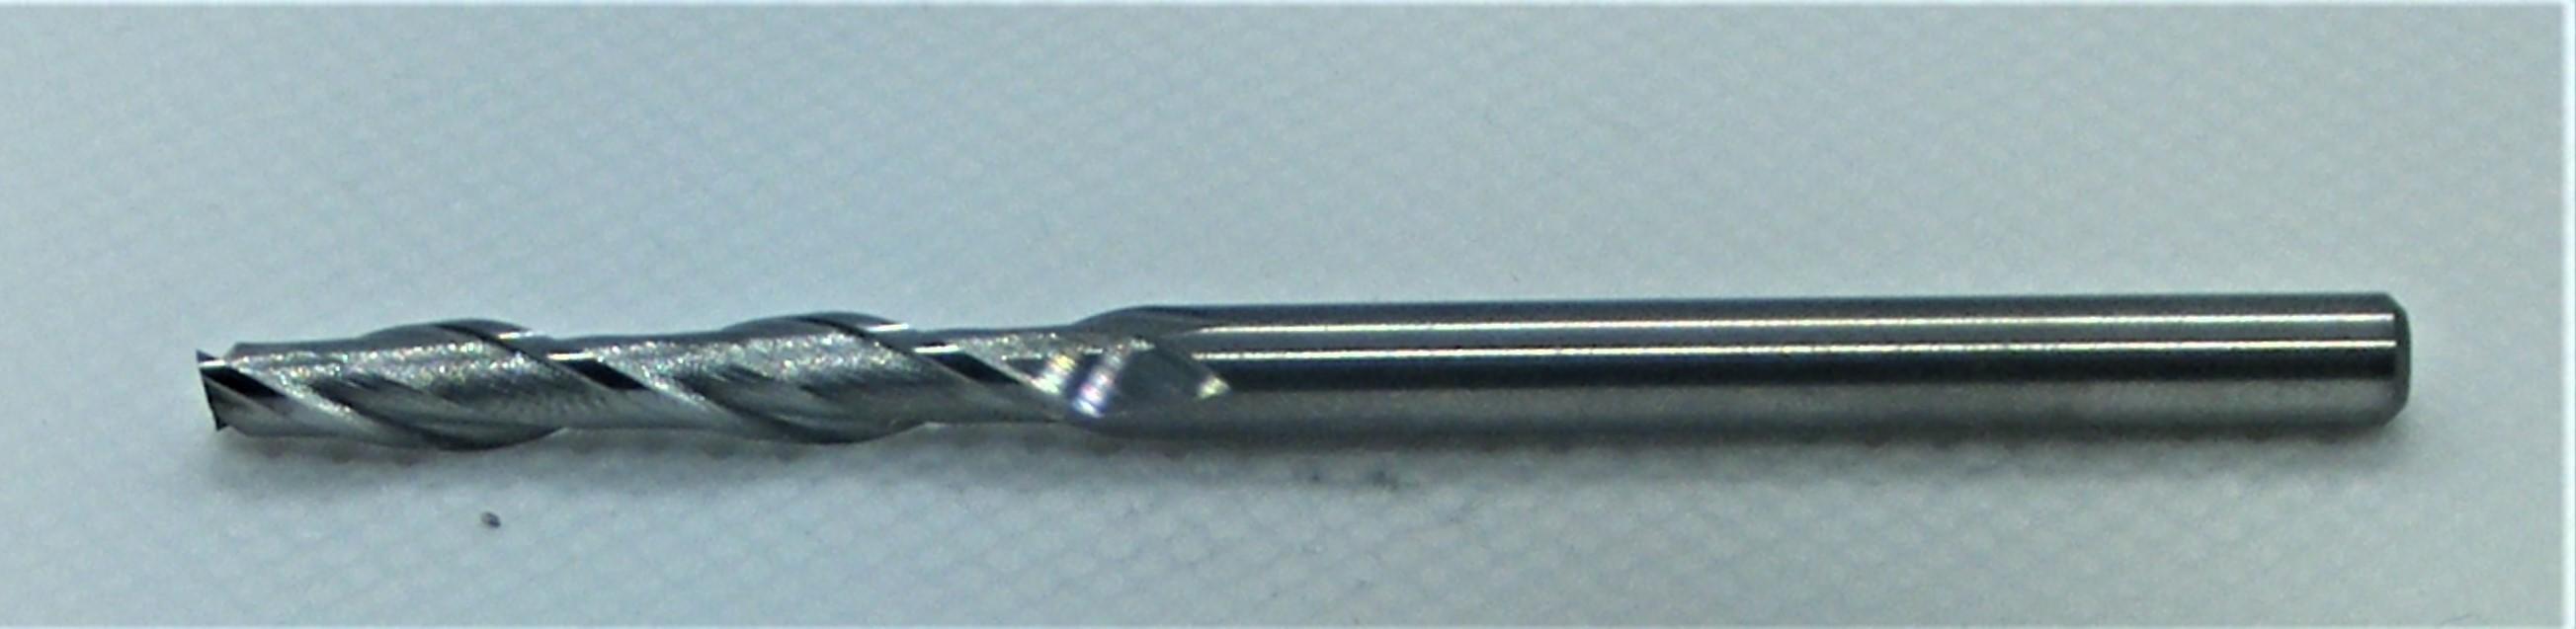 Group of 10-6mm Carbide Endmill 2 Flute Ball Nose Regular TiAlN 